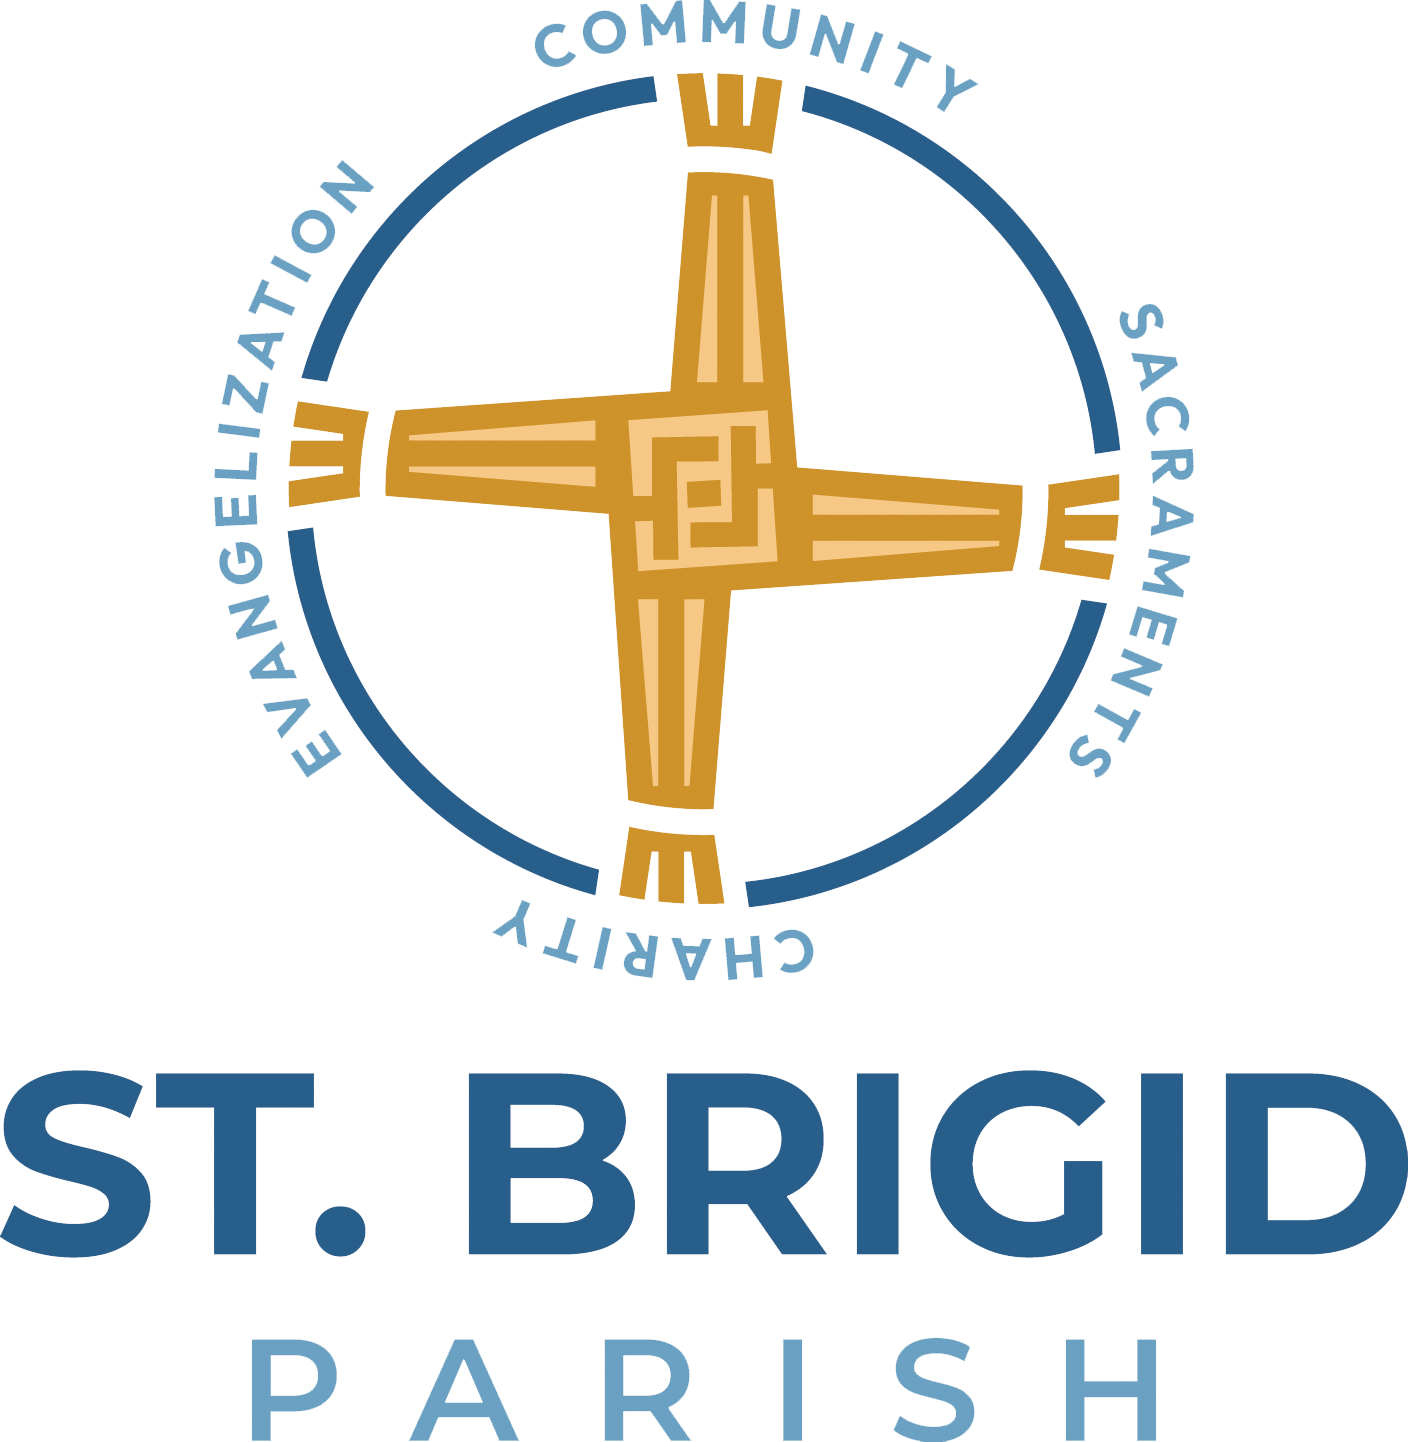 St. Brigid Parish - St. Pat's Church